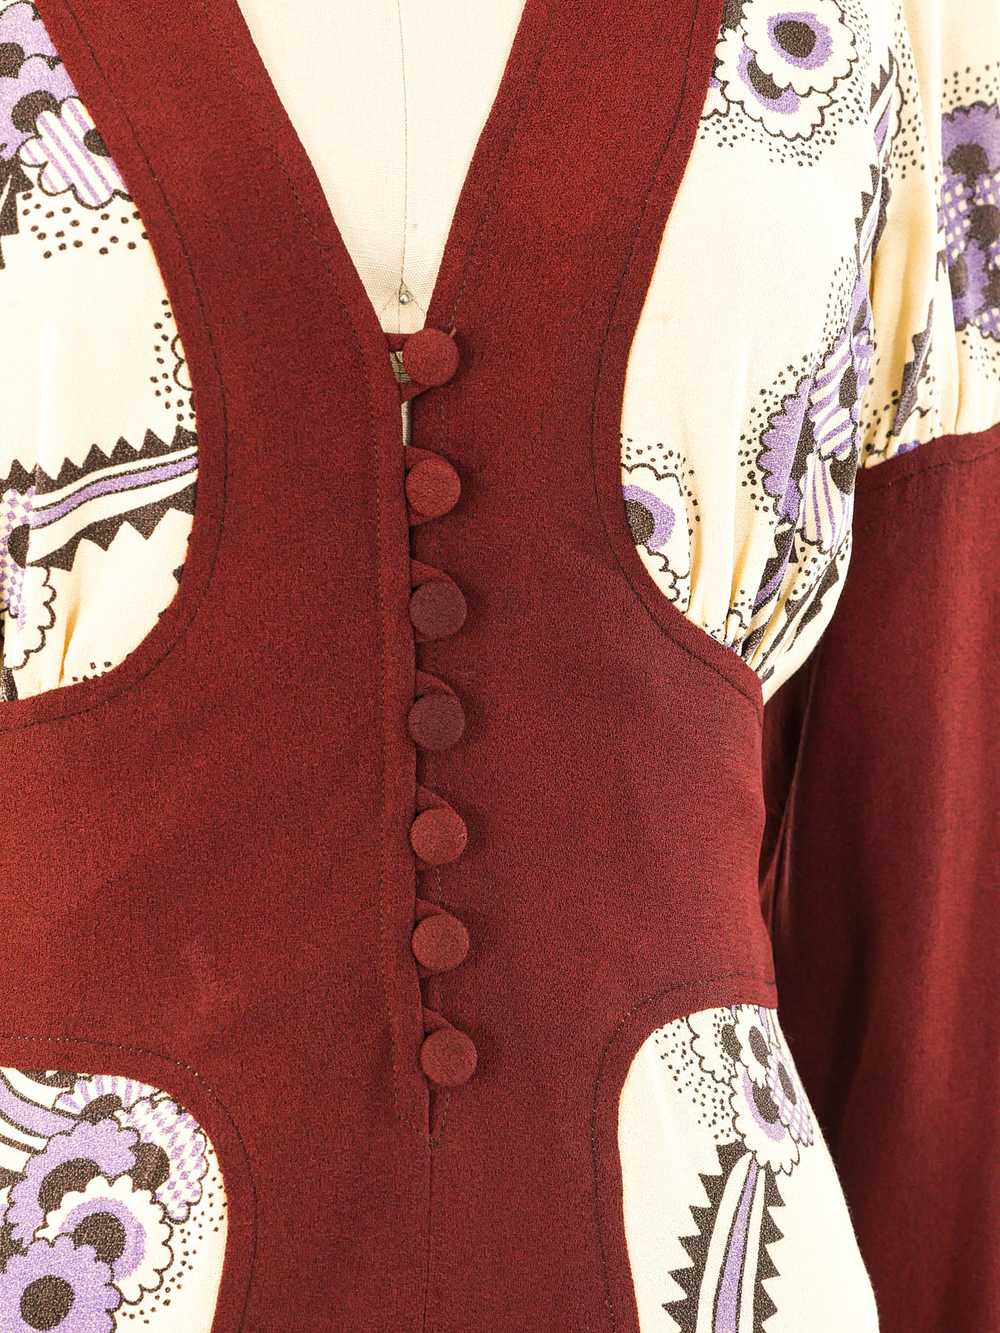 Ossie Clark Celia Birtwell Printed Crepe Dress - image 2